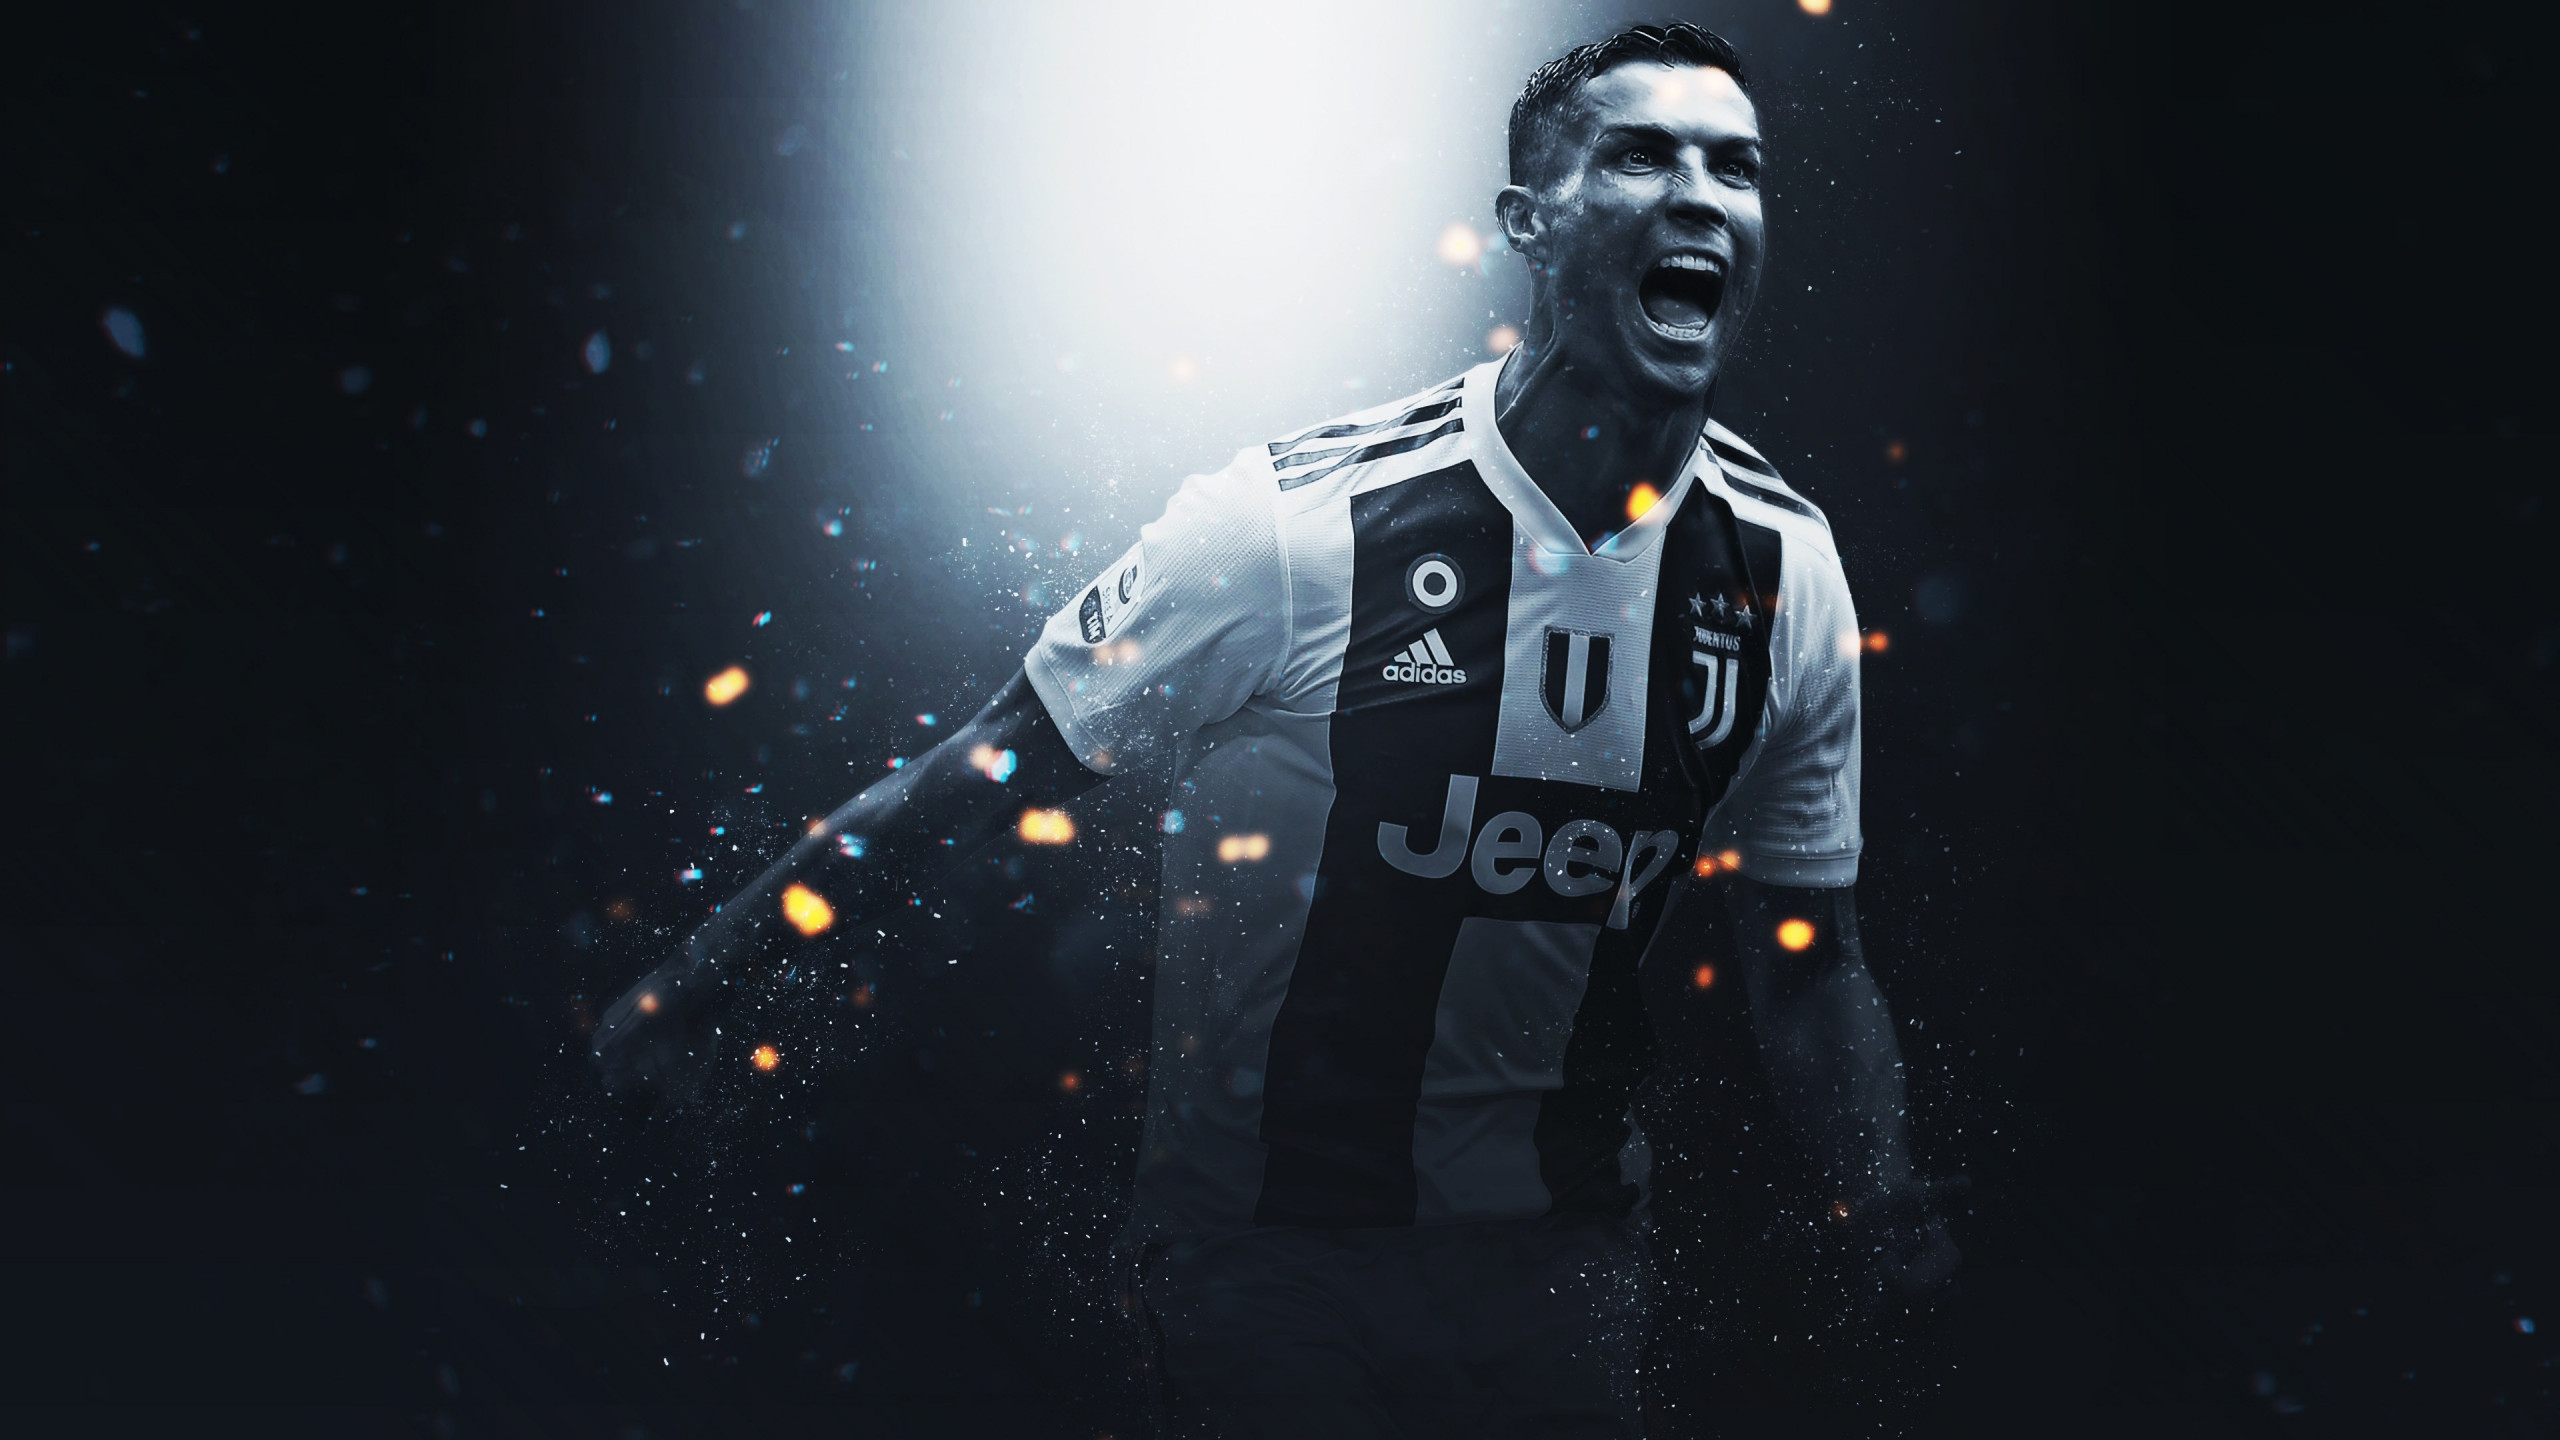 Download wallpaper: Cristiano Ronaldo at Juventus 2560x1440